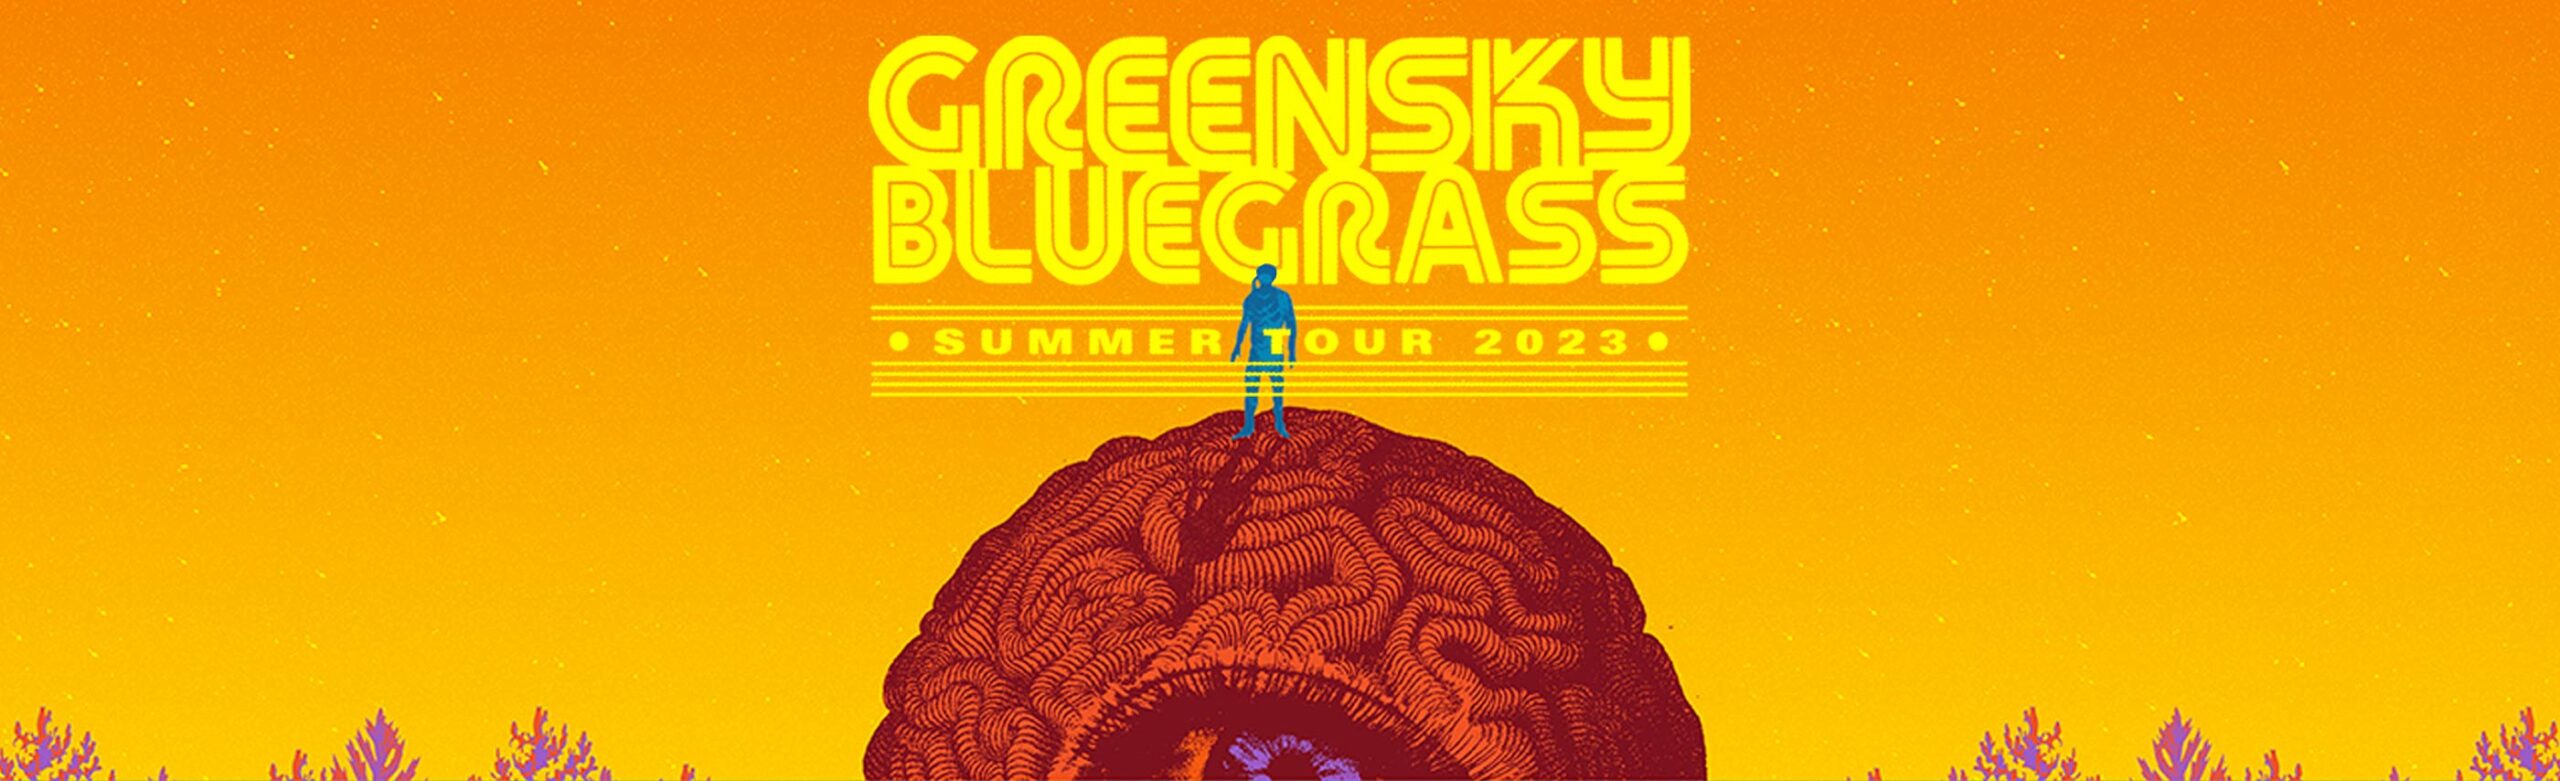 Greensky Bluegrass Confirms Return to KettleHouse Amphitheater in 2023 Image